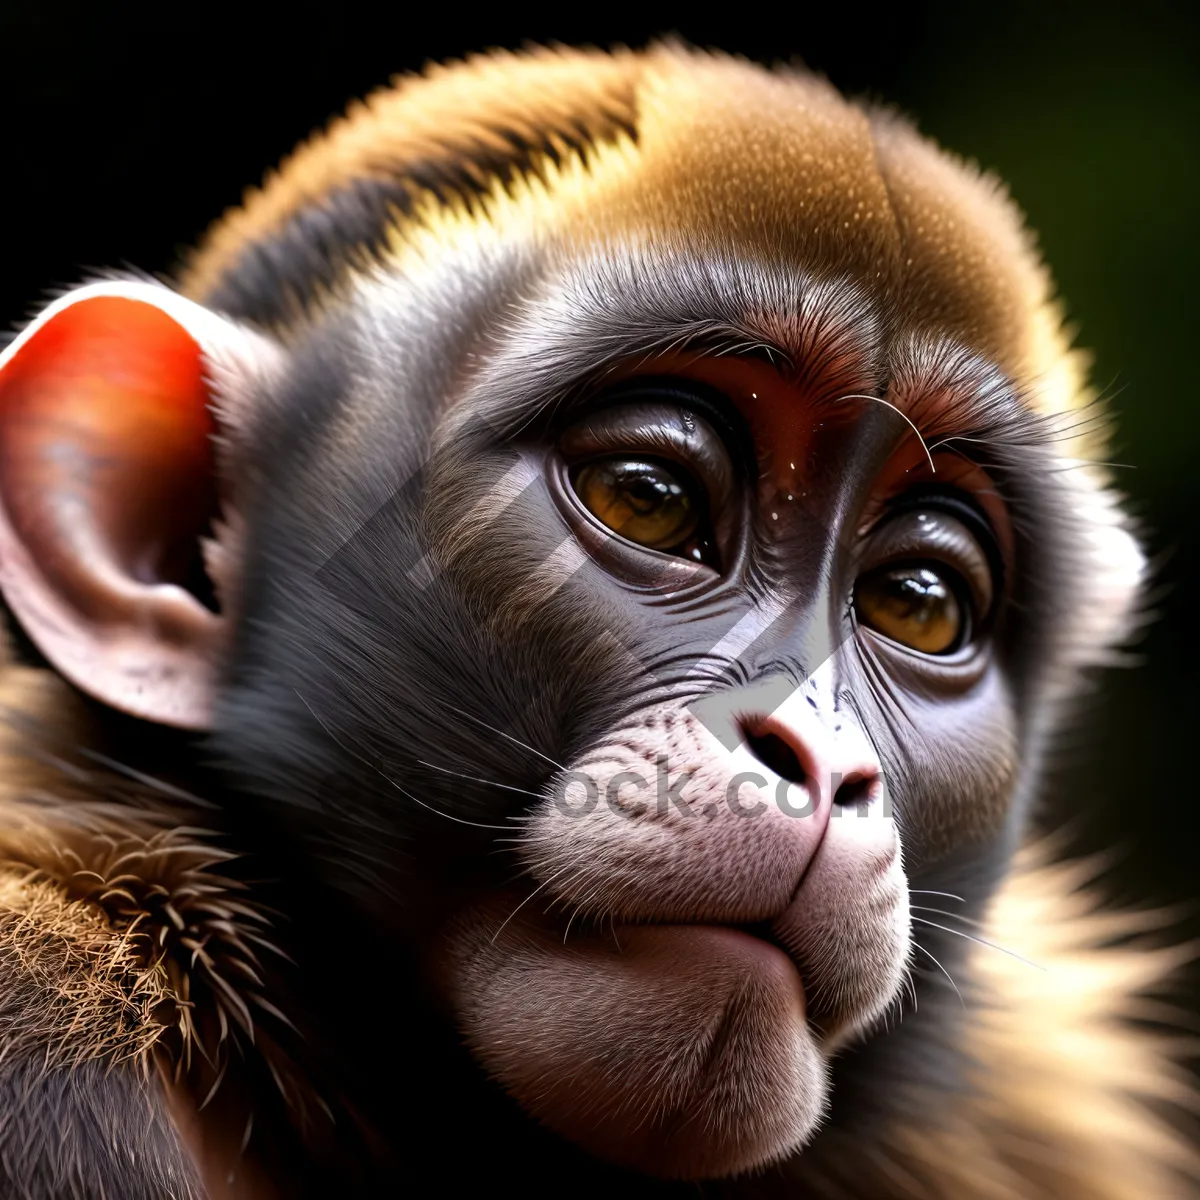 Picture of Adorable Baby Orangutan in Natural Jungle Habitat